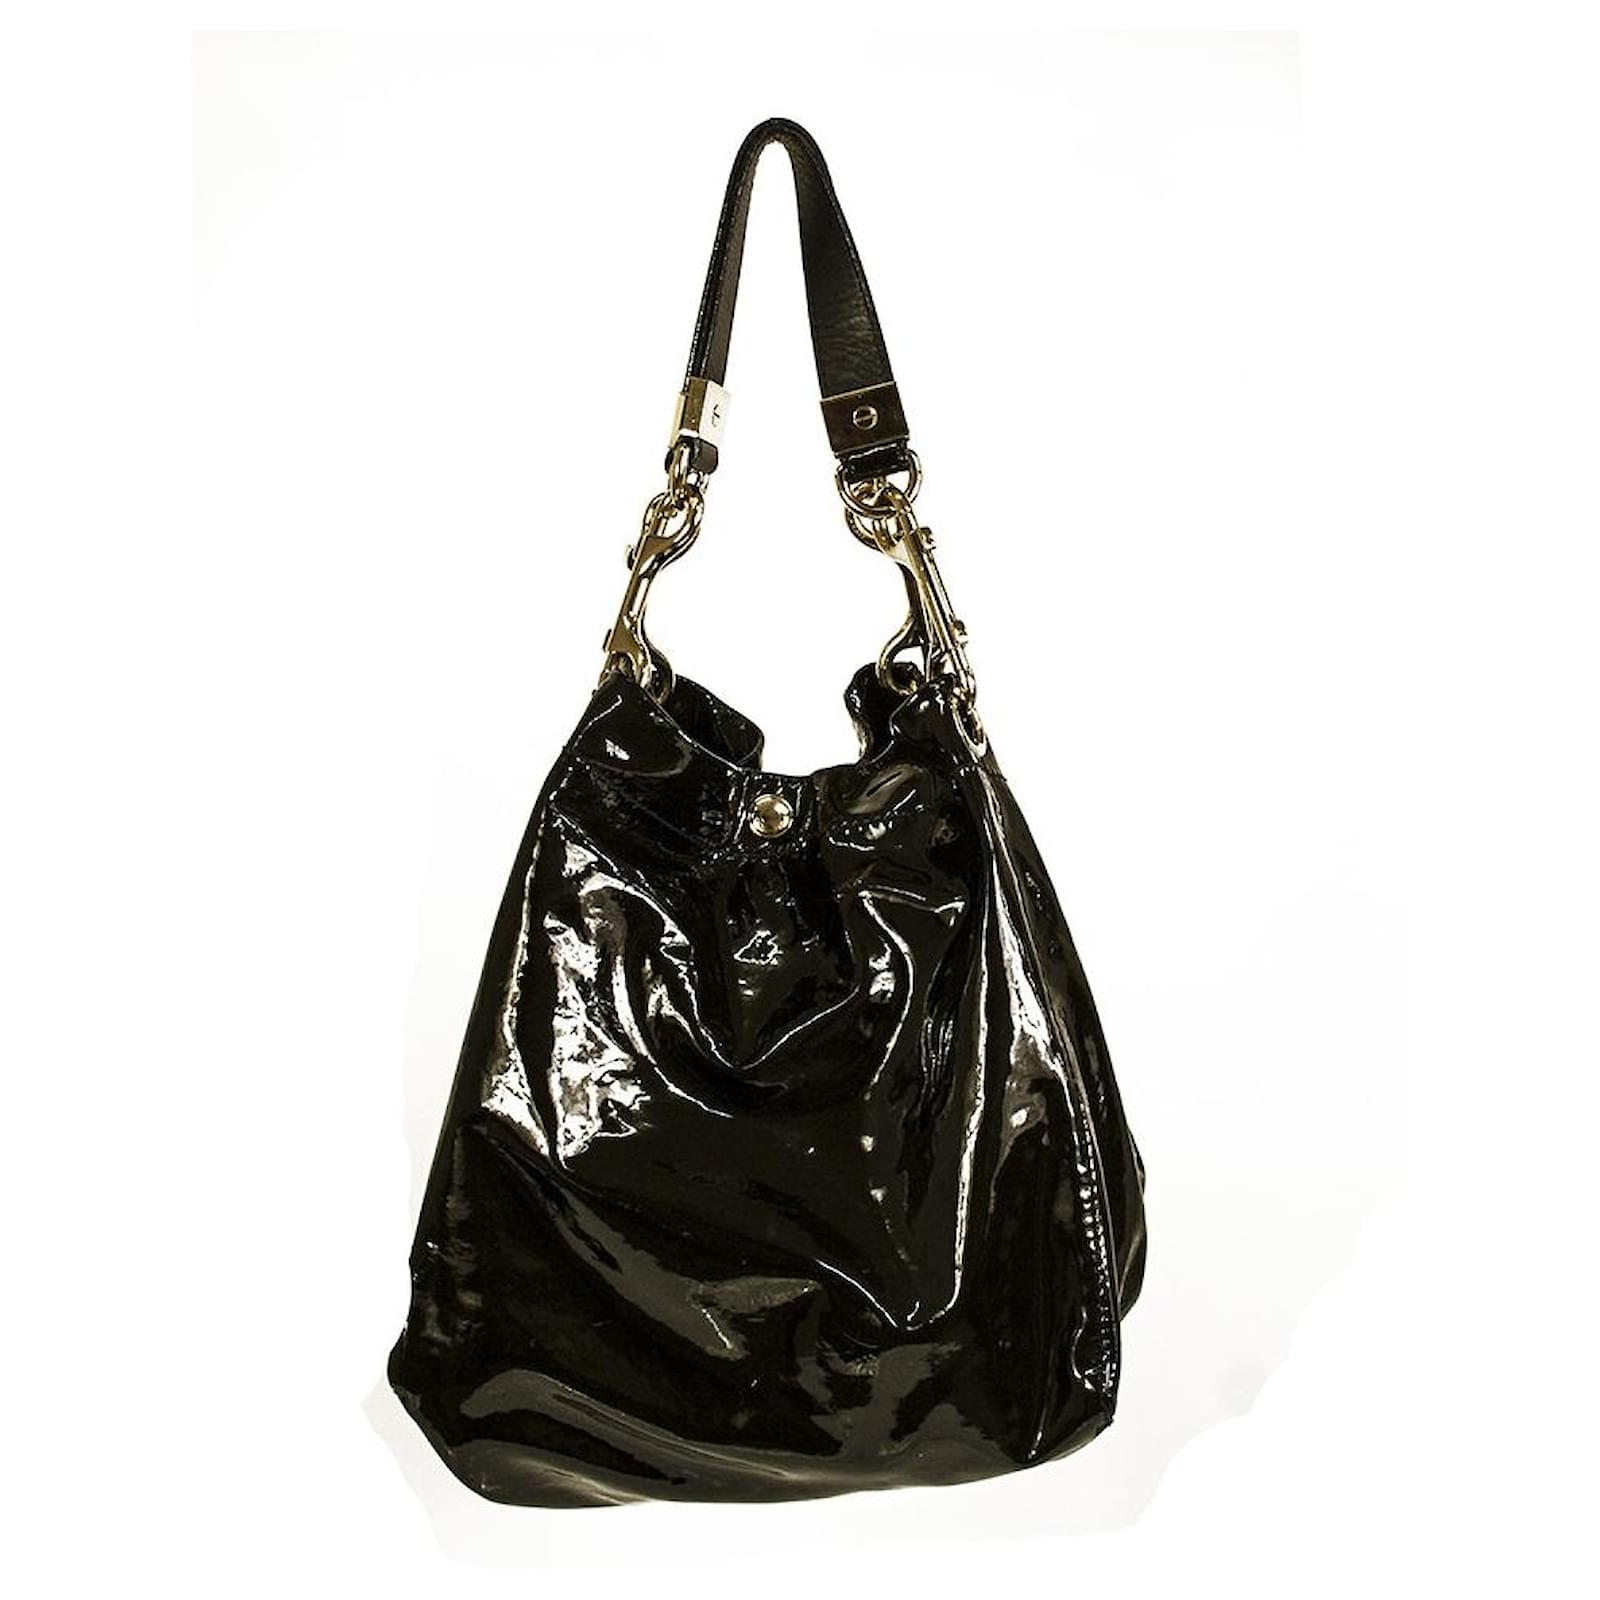 NEW Jimmy Choo Tote Bag Shoulder Patent Leather Handbag Black Zip 